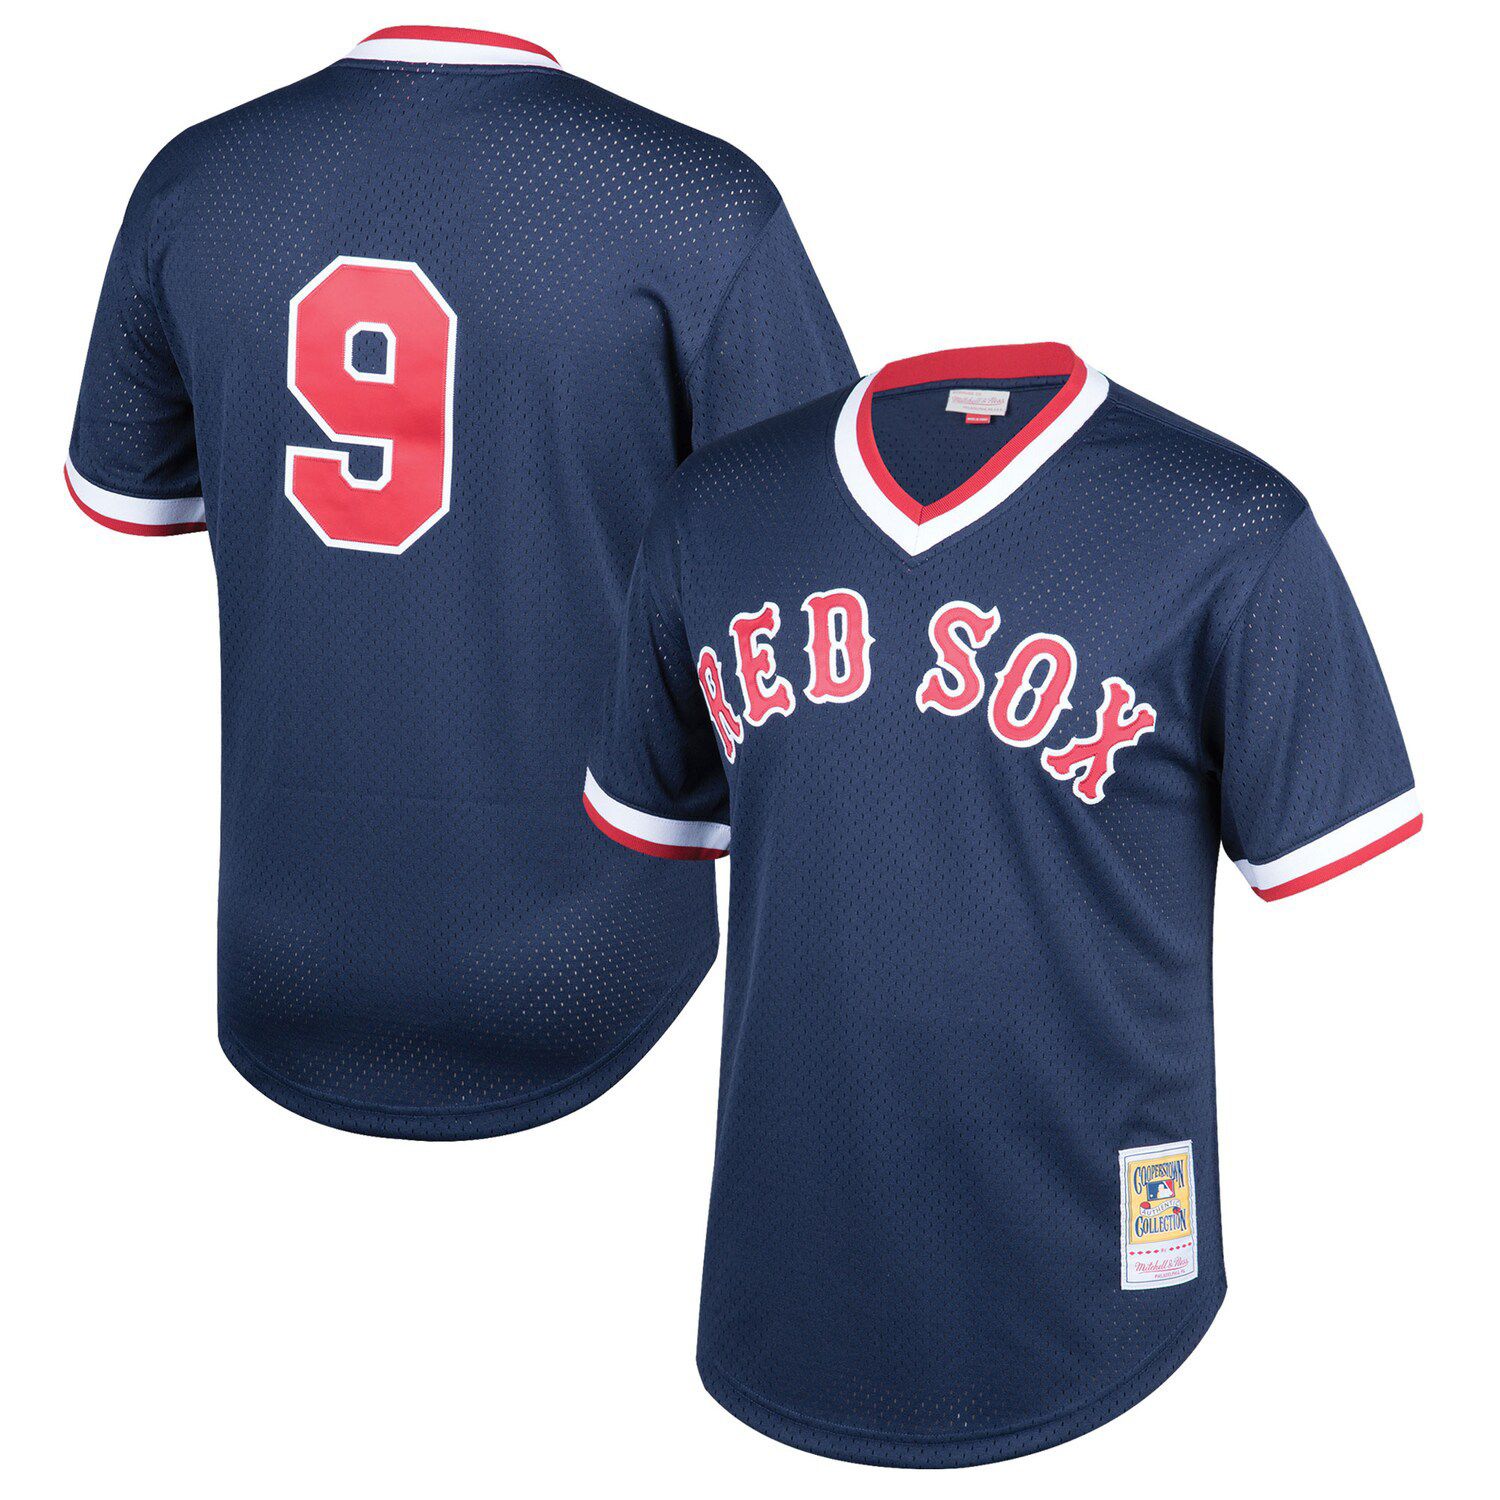 2003 Tim Hamulack Boston Red Sox Batting Practice Jersey. Though, Lot  #65155